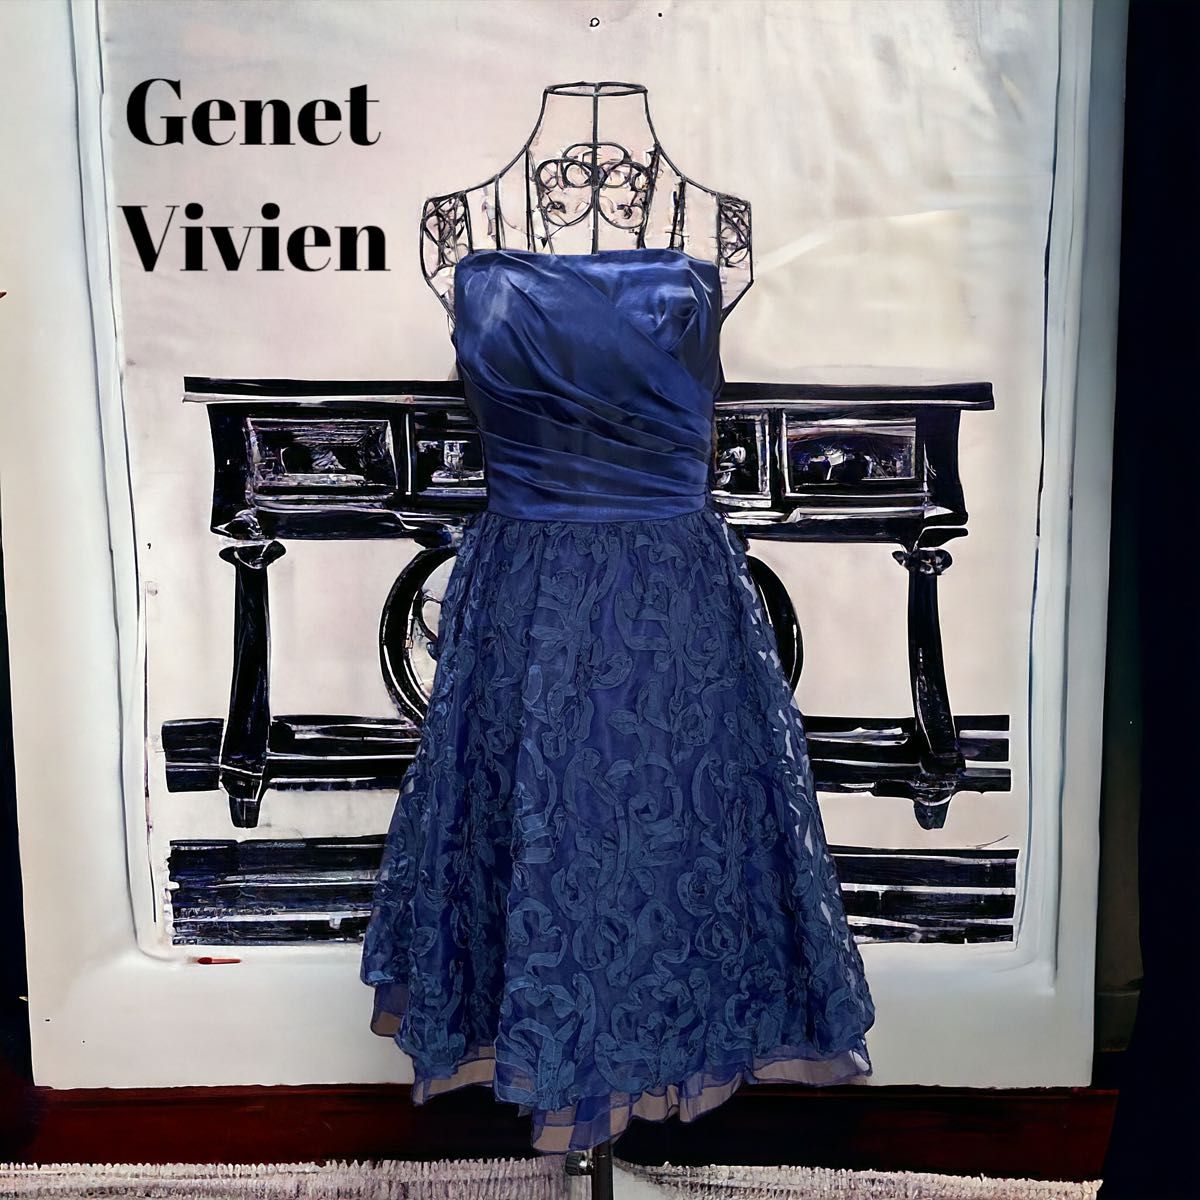 Genet Vivien ジュネビビアン 高級 パーティードレス ワンピース 発表